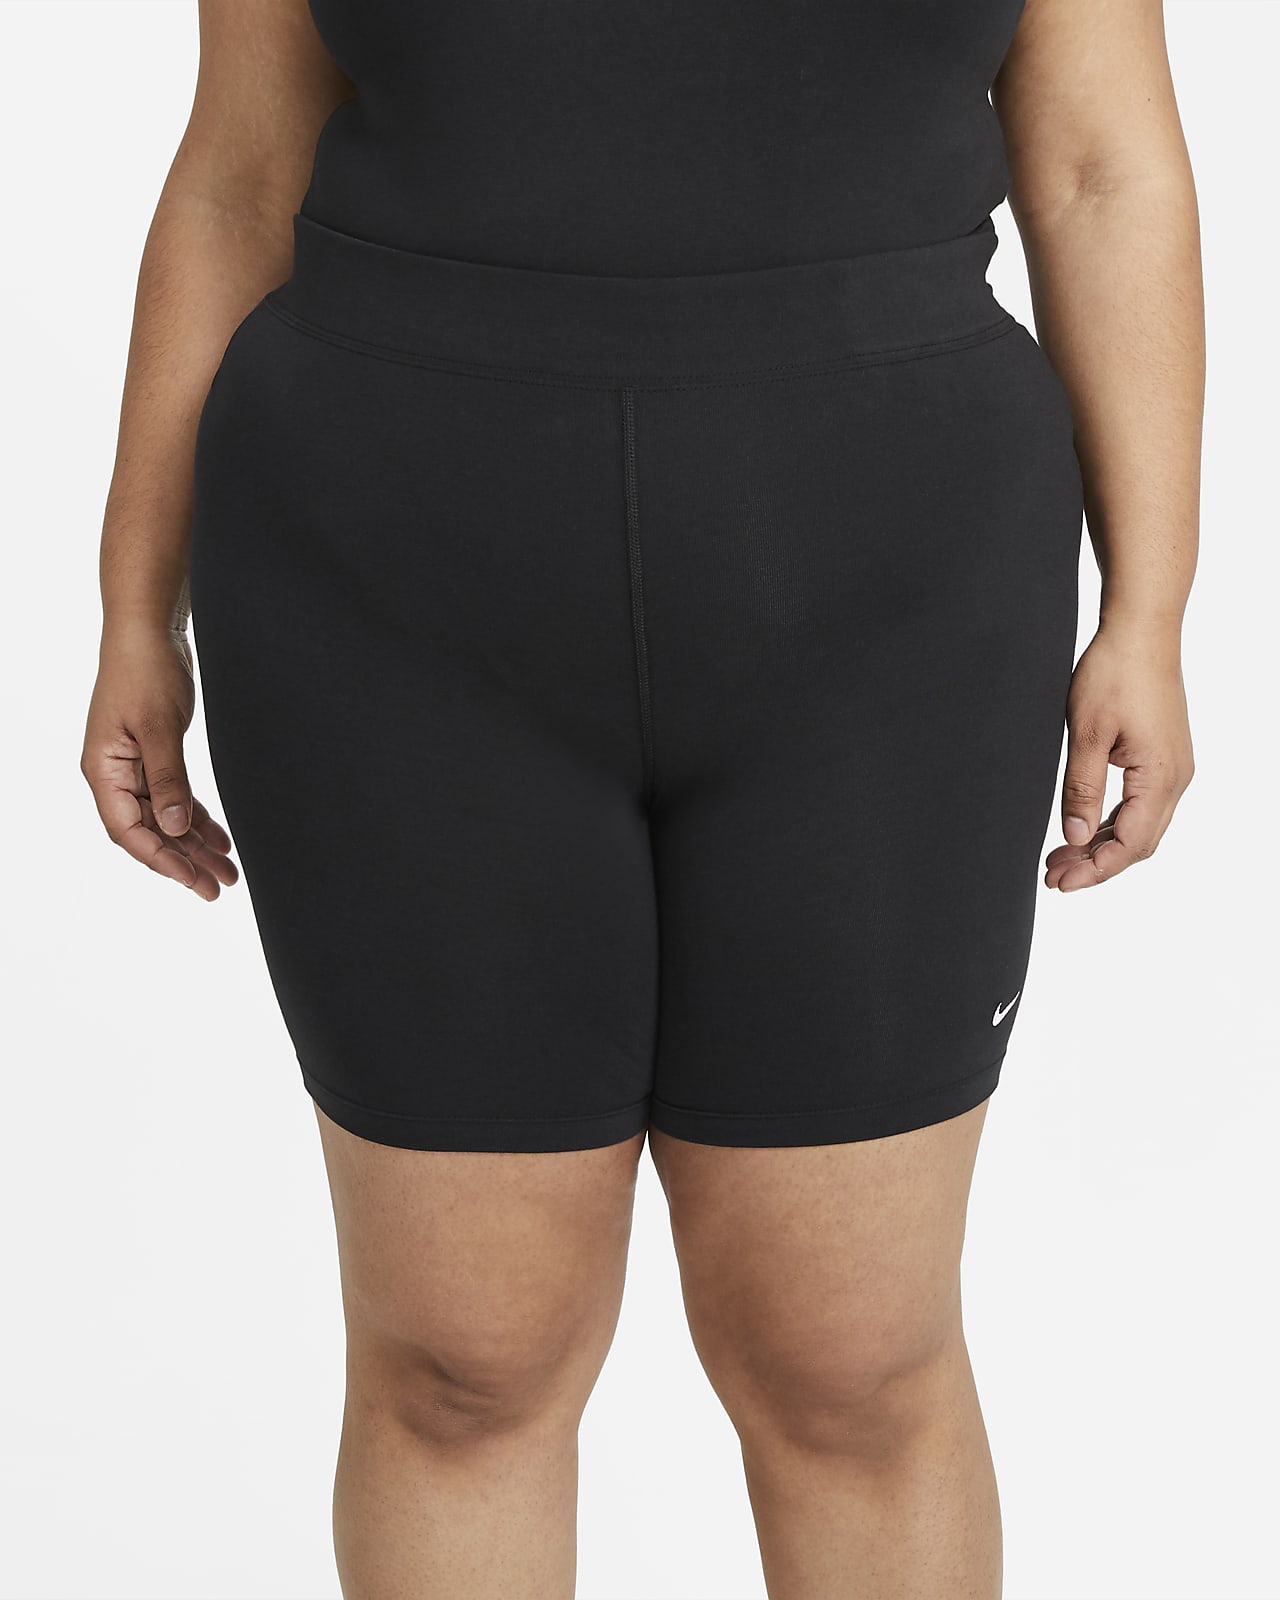 Los mejores shorts de ciclismo Nike para mujer. Nike MX